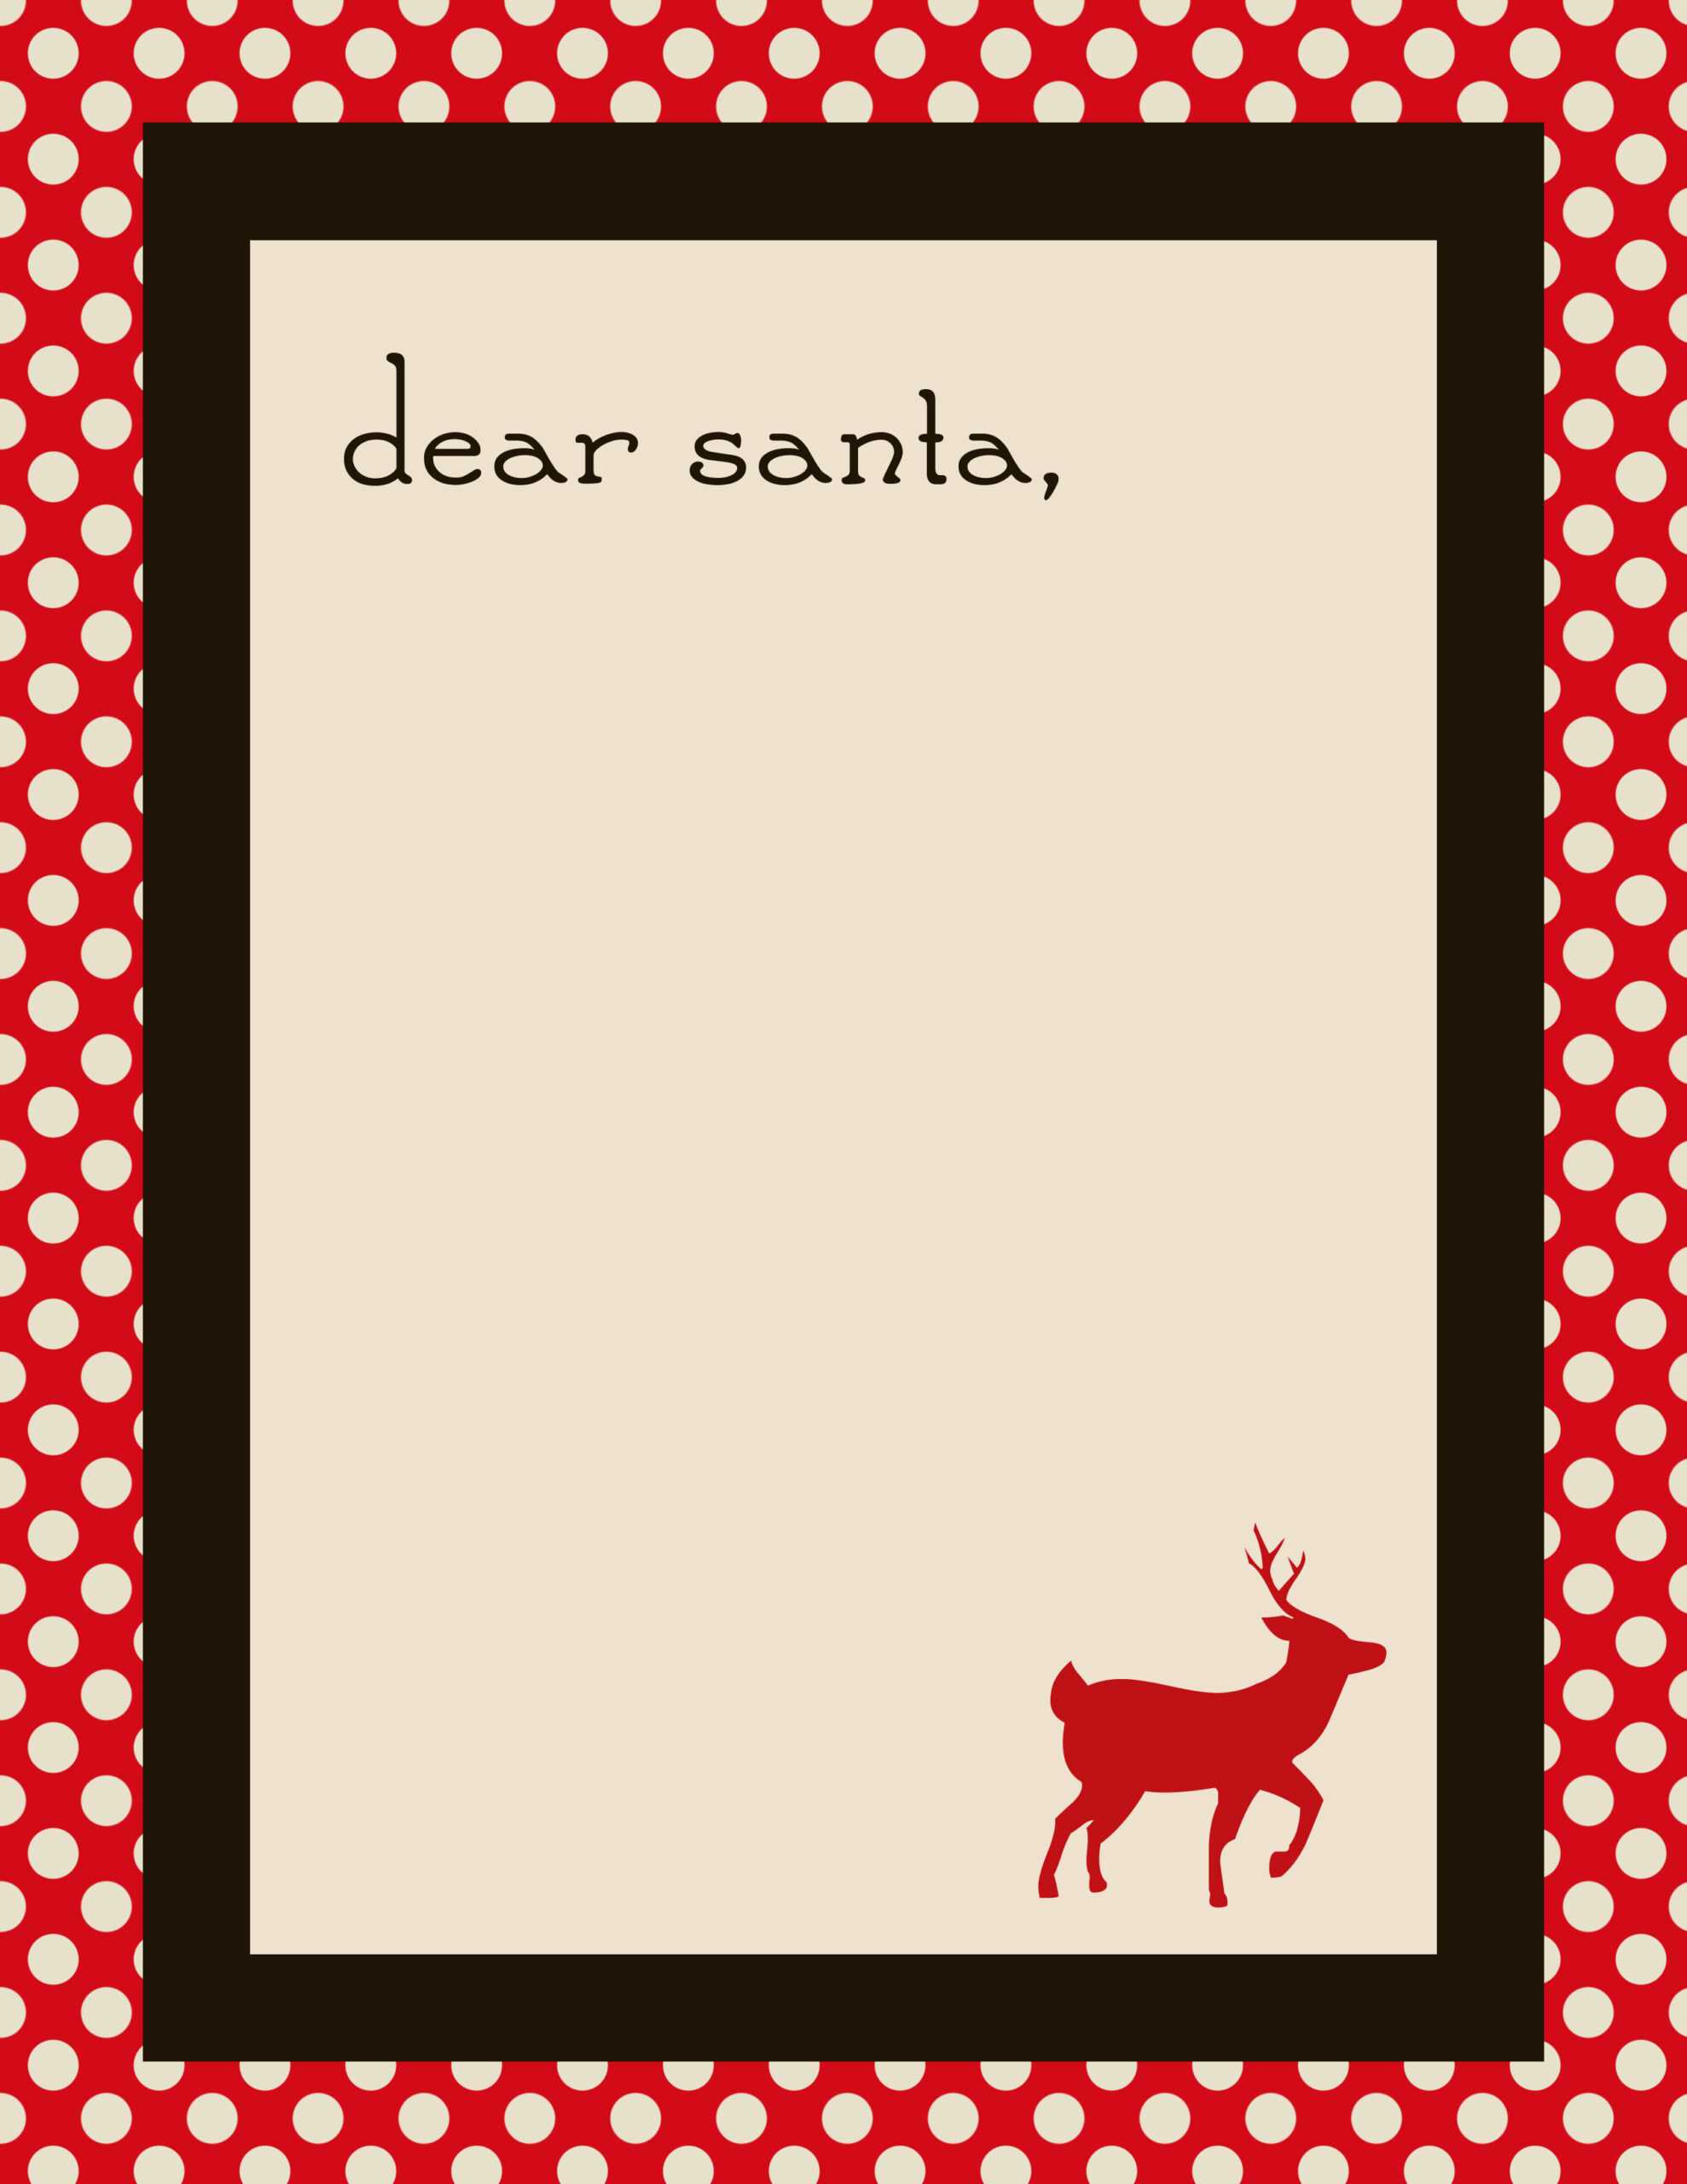 Free Santa Letter Templates | Oldsaltfarm With Santa Letter Template Word